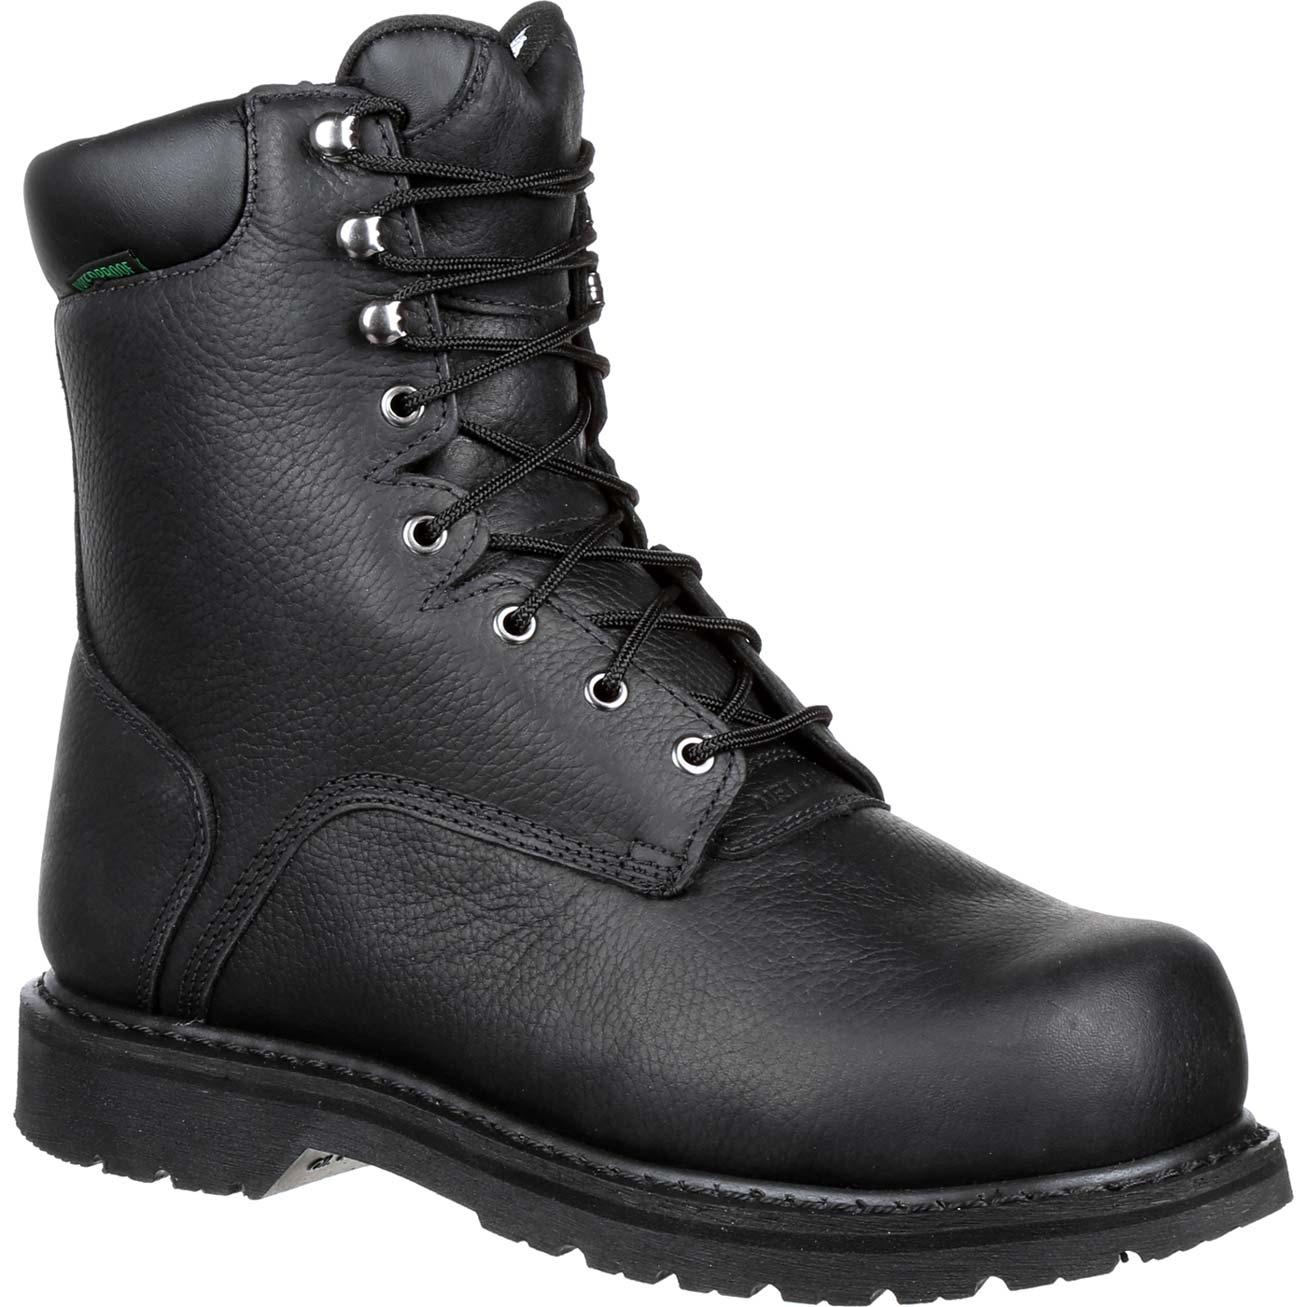 Lehigh Safety Shoes Unisex Steel Toe Internal Met Guard ...